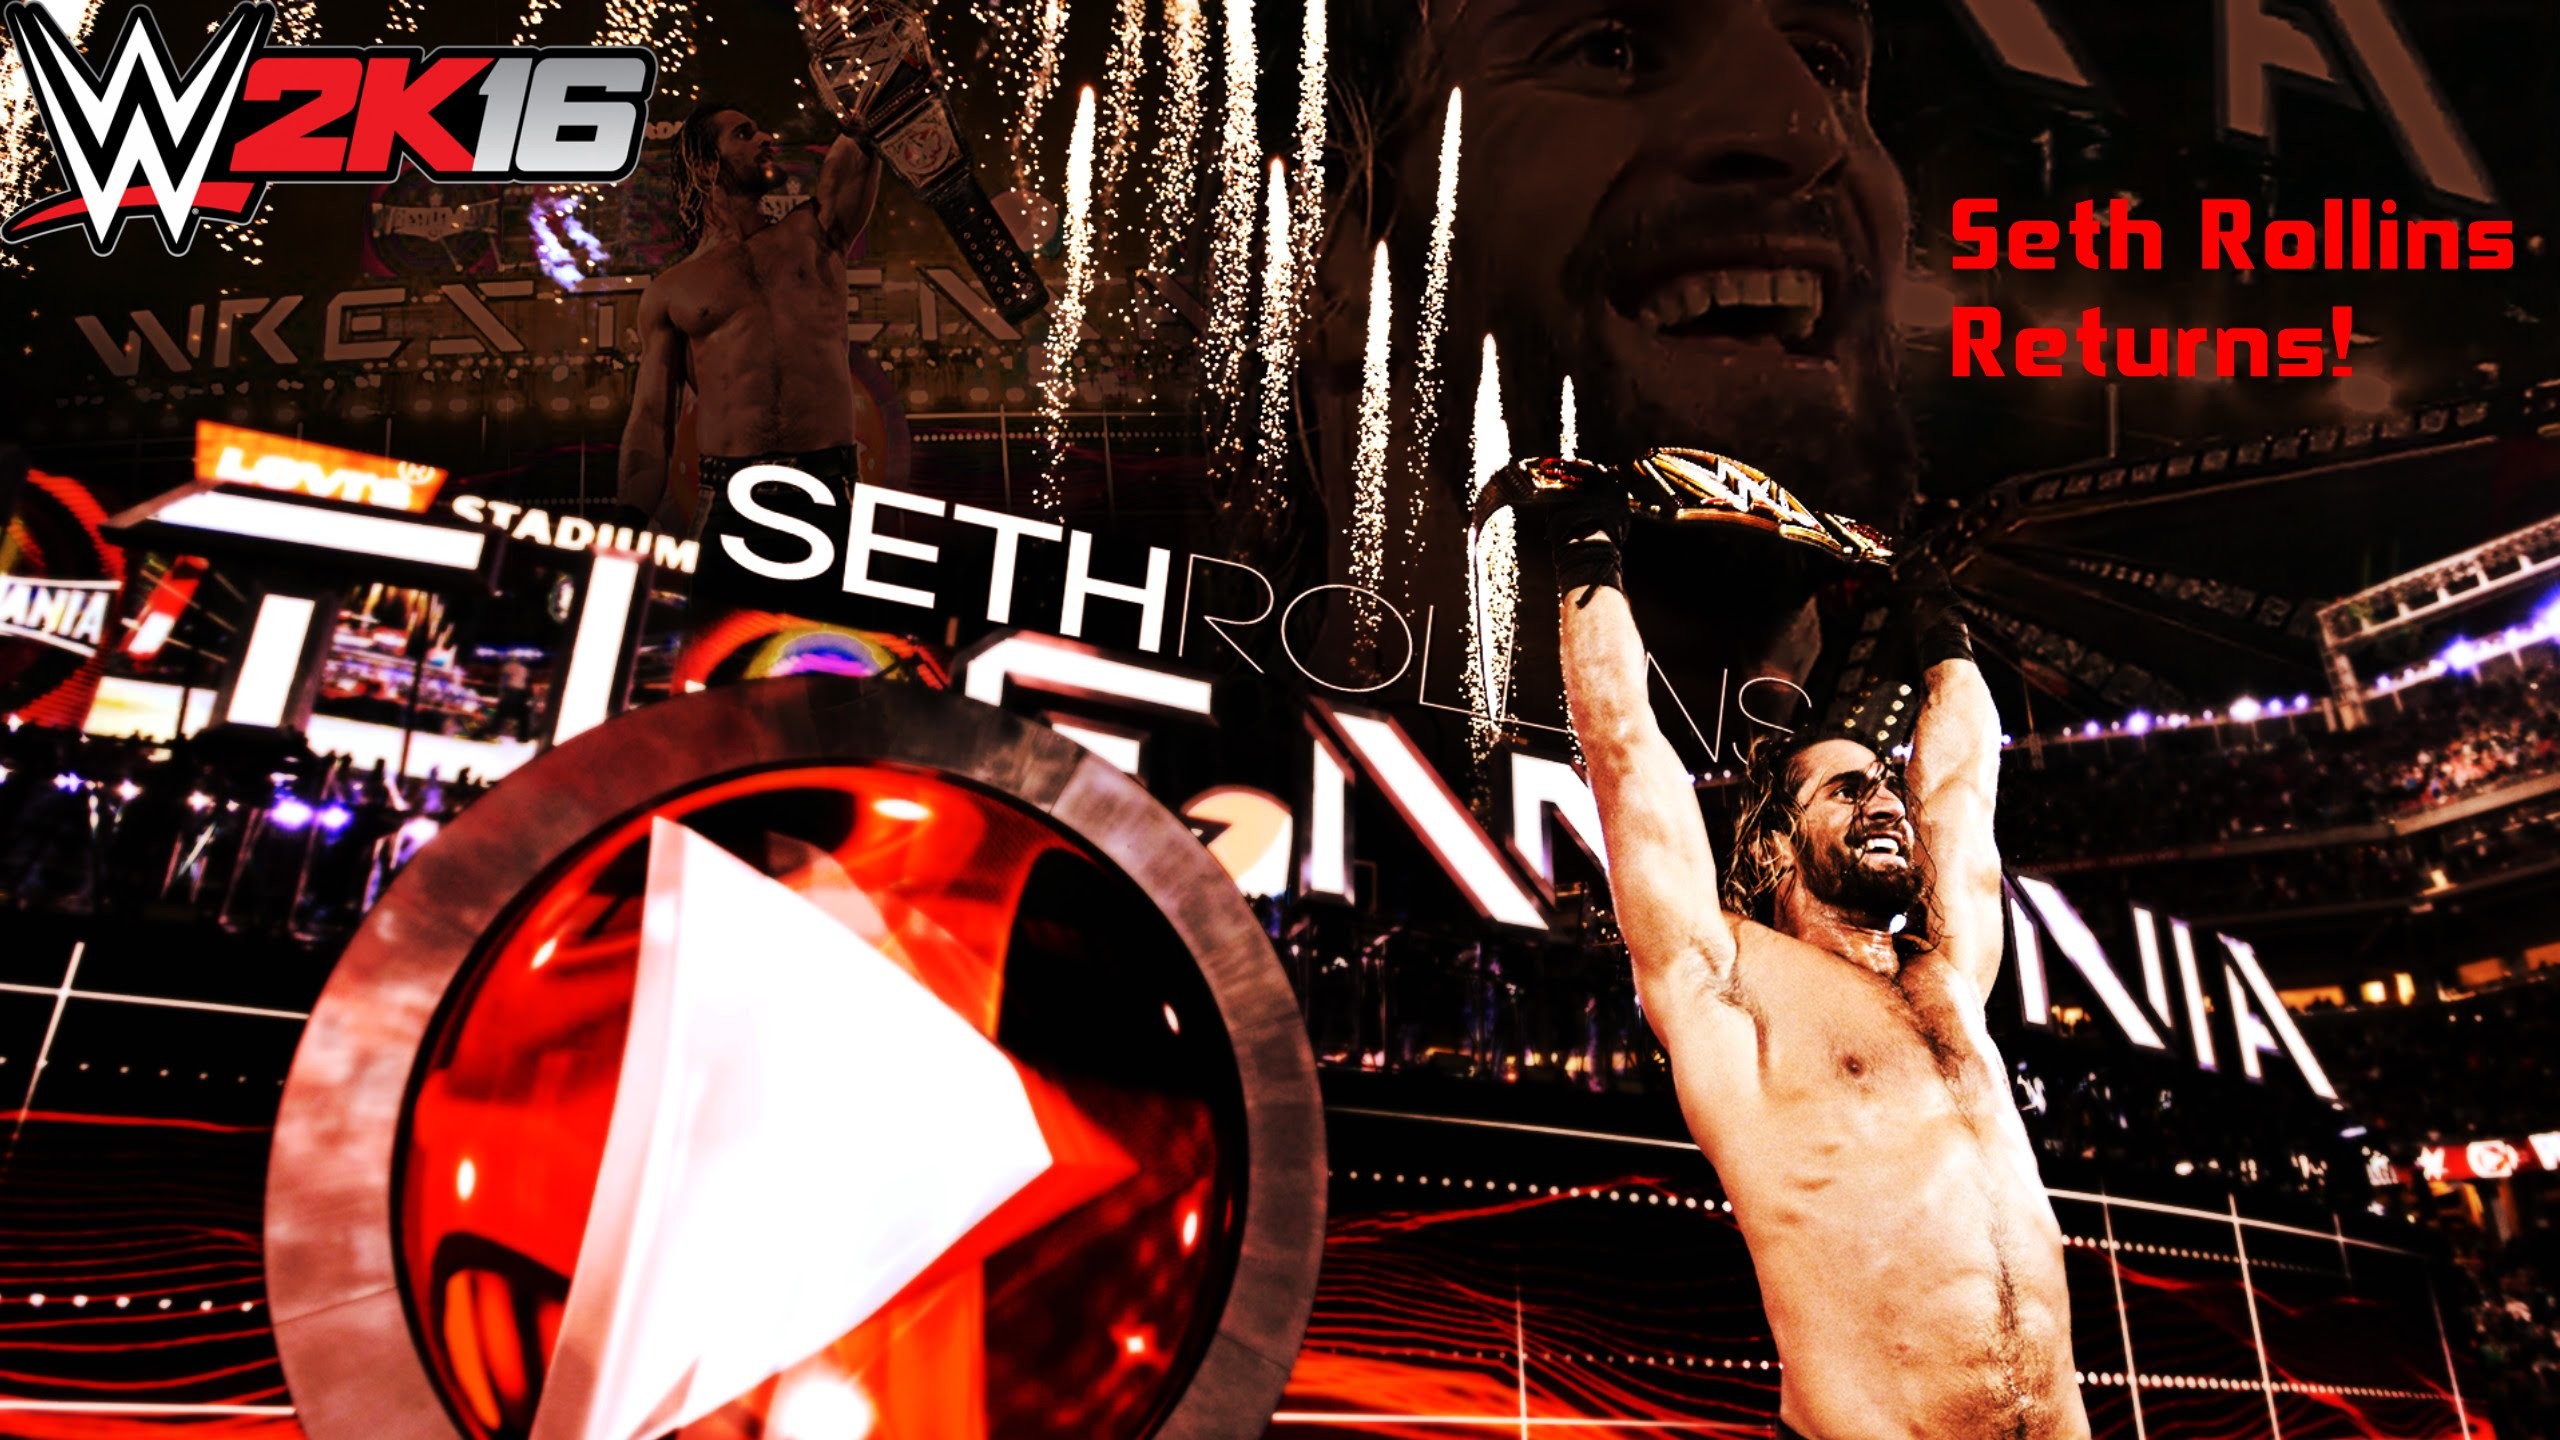 Seth Rollins Returns Wwe 2k16 Wrestlemania 32 Concept 2560x1440